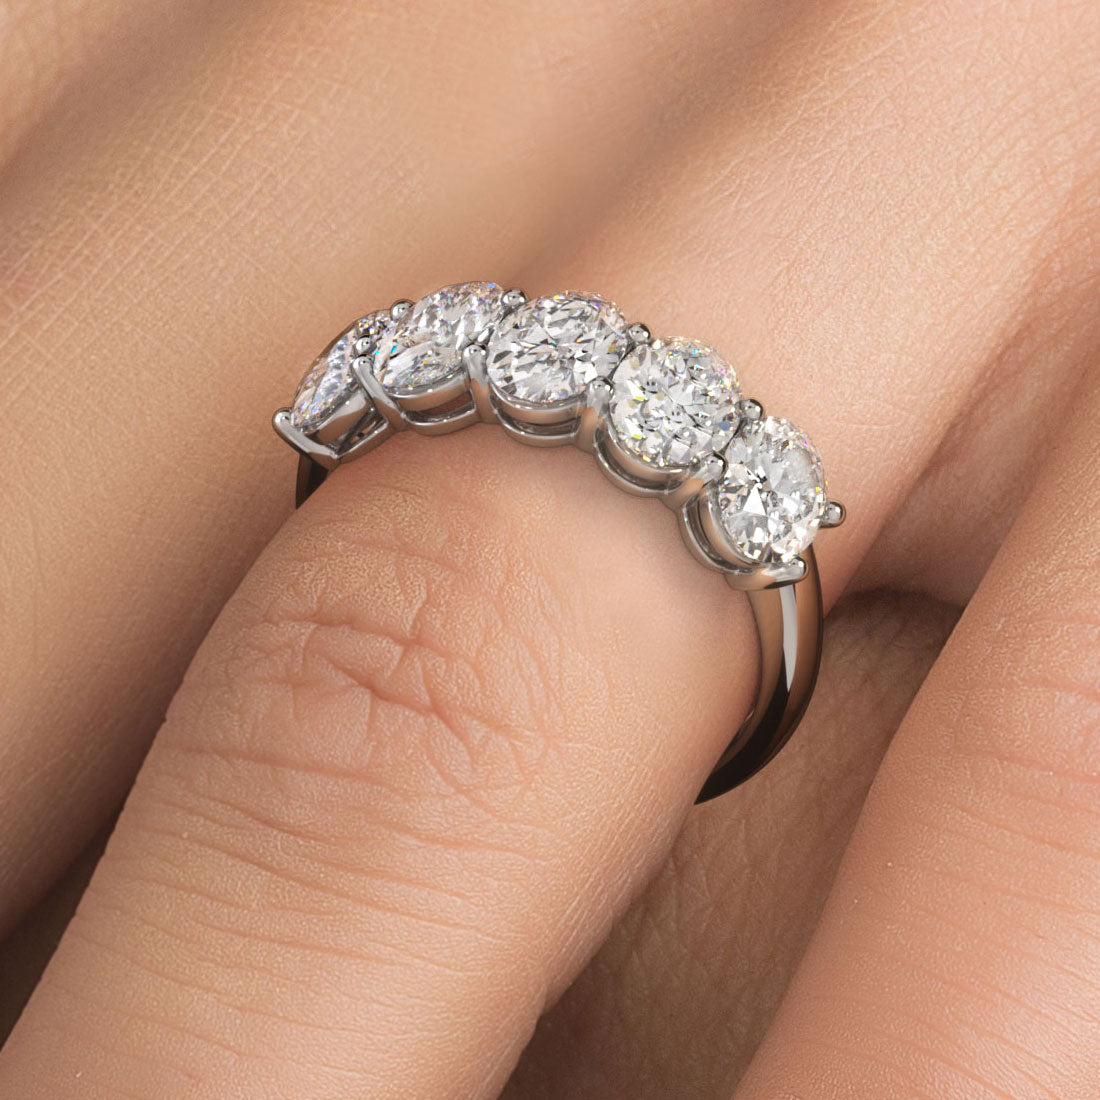 2.00 Carat 5 Stone Oval Cut Diamond Wedding Band Anniversary Ring Set in 14k White Gold